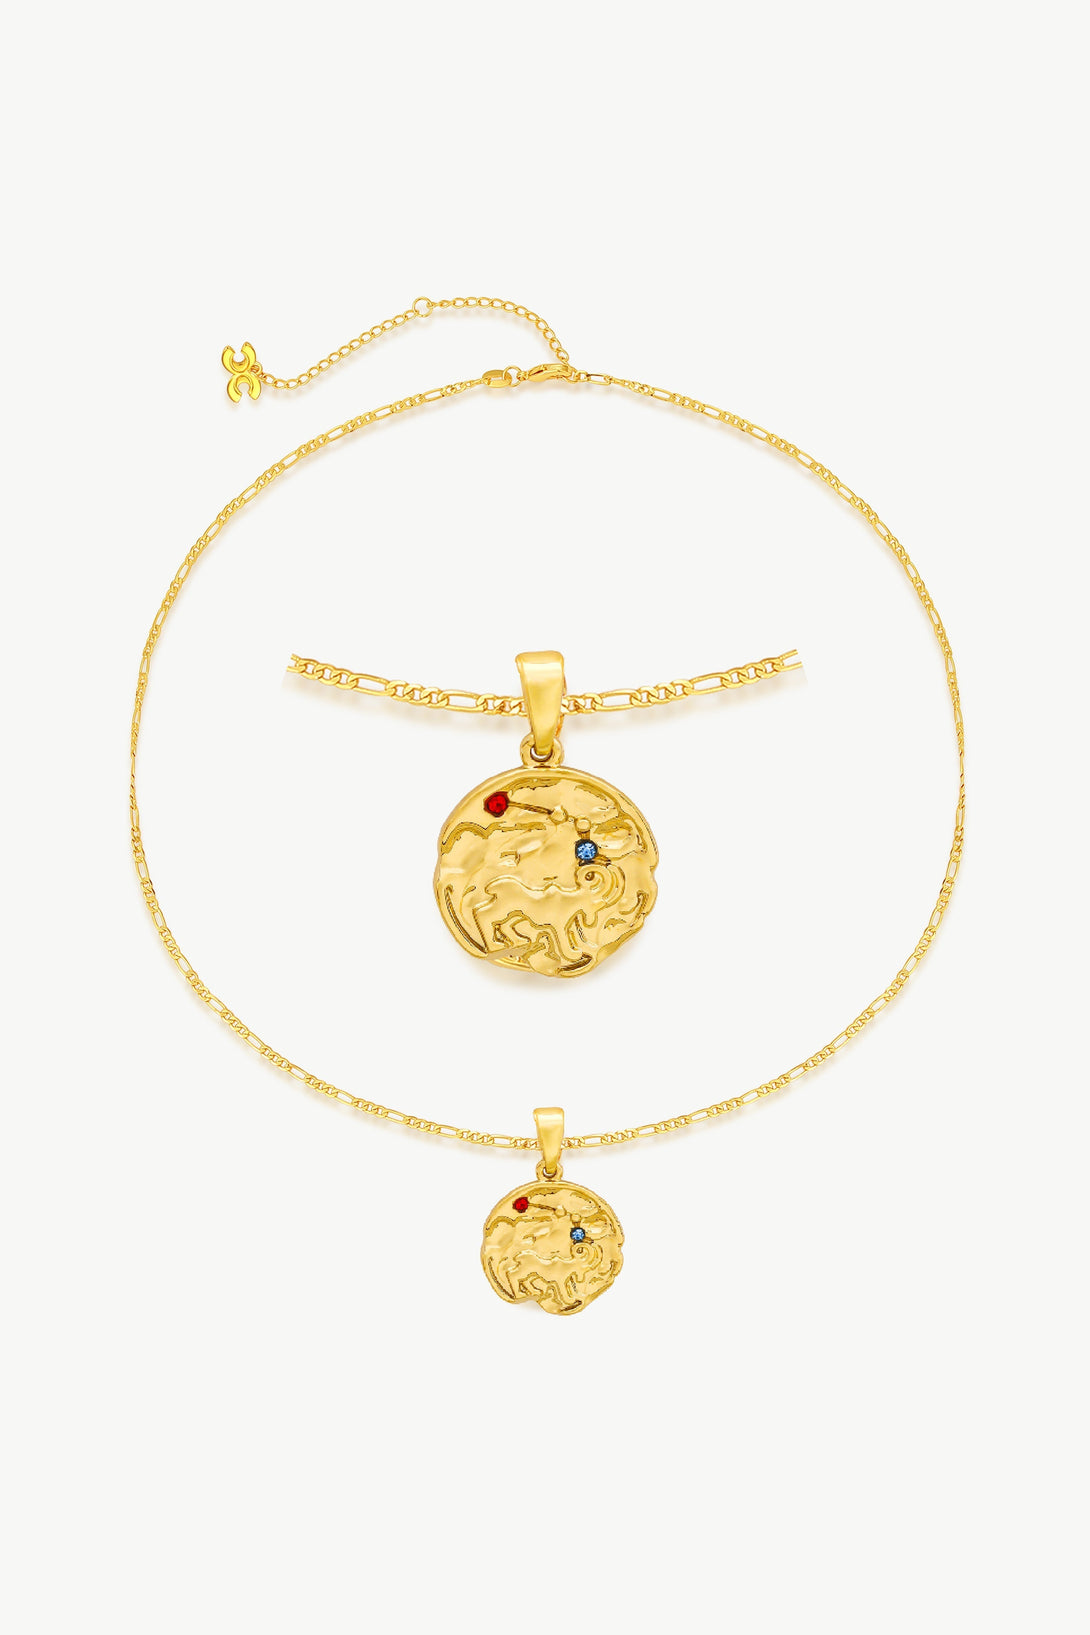 Gold Sculptural Zodiac Sign Pendant Necklace Set-Aries - Classicharms